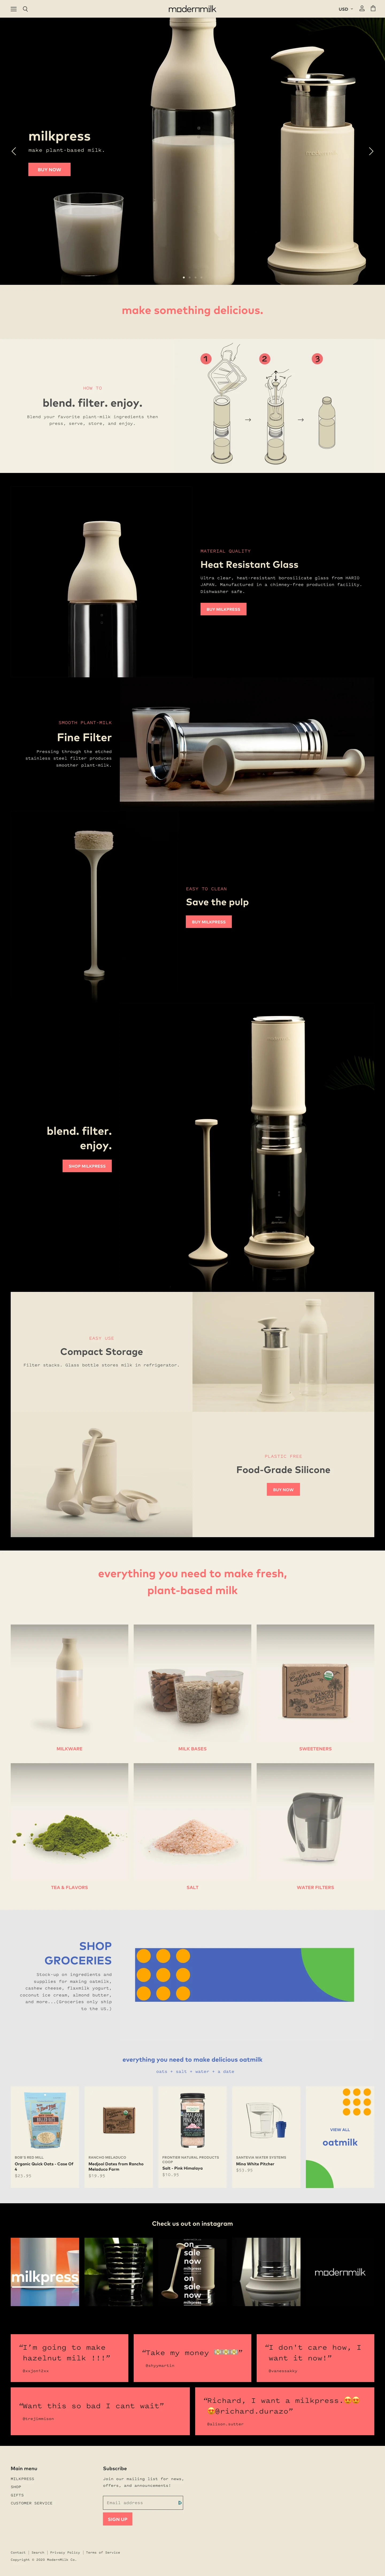 ModernMilk Landing Page Example: Make something delicious. Make plant-based milk.